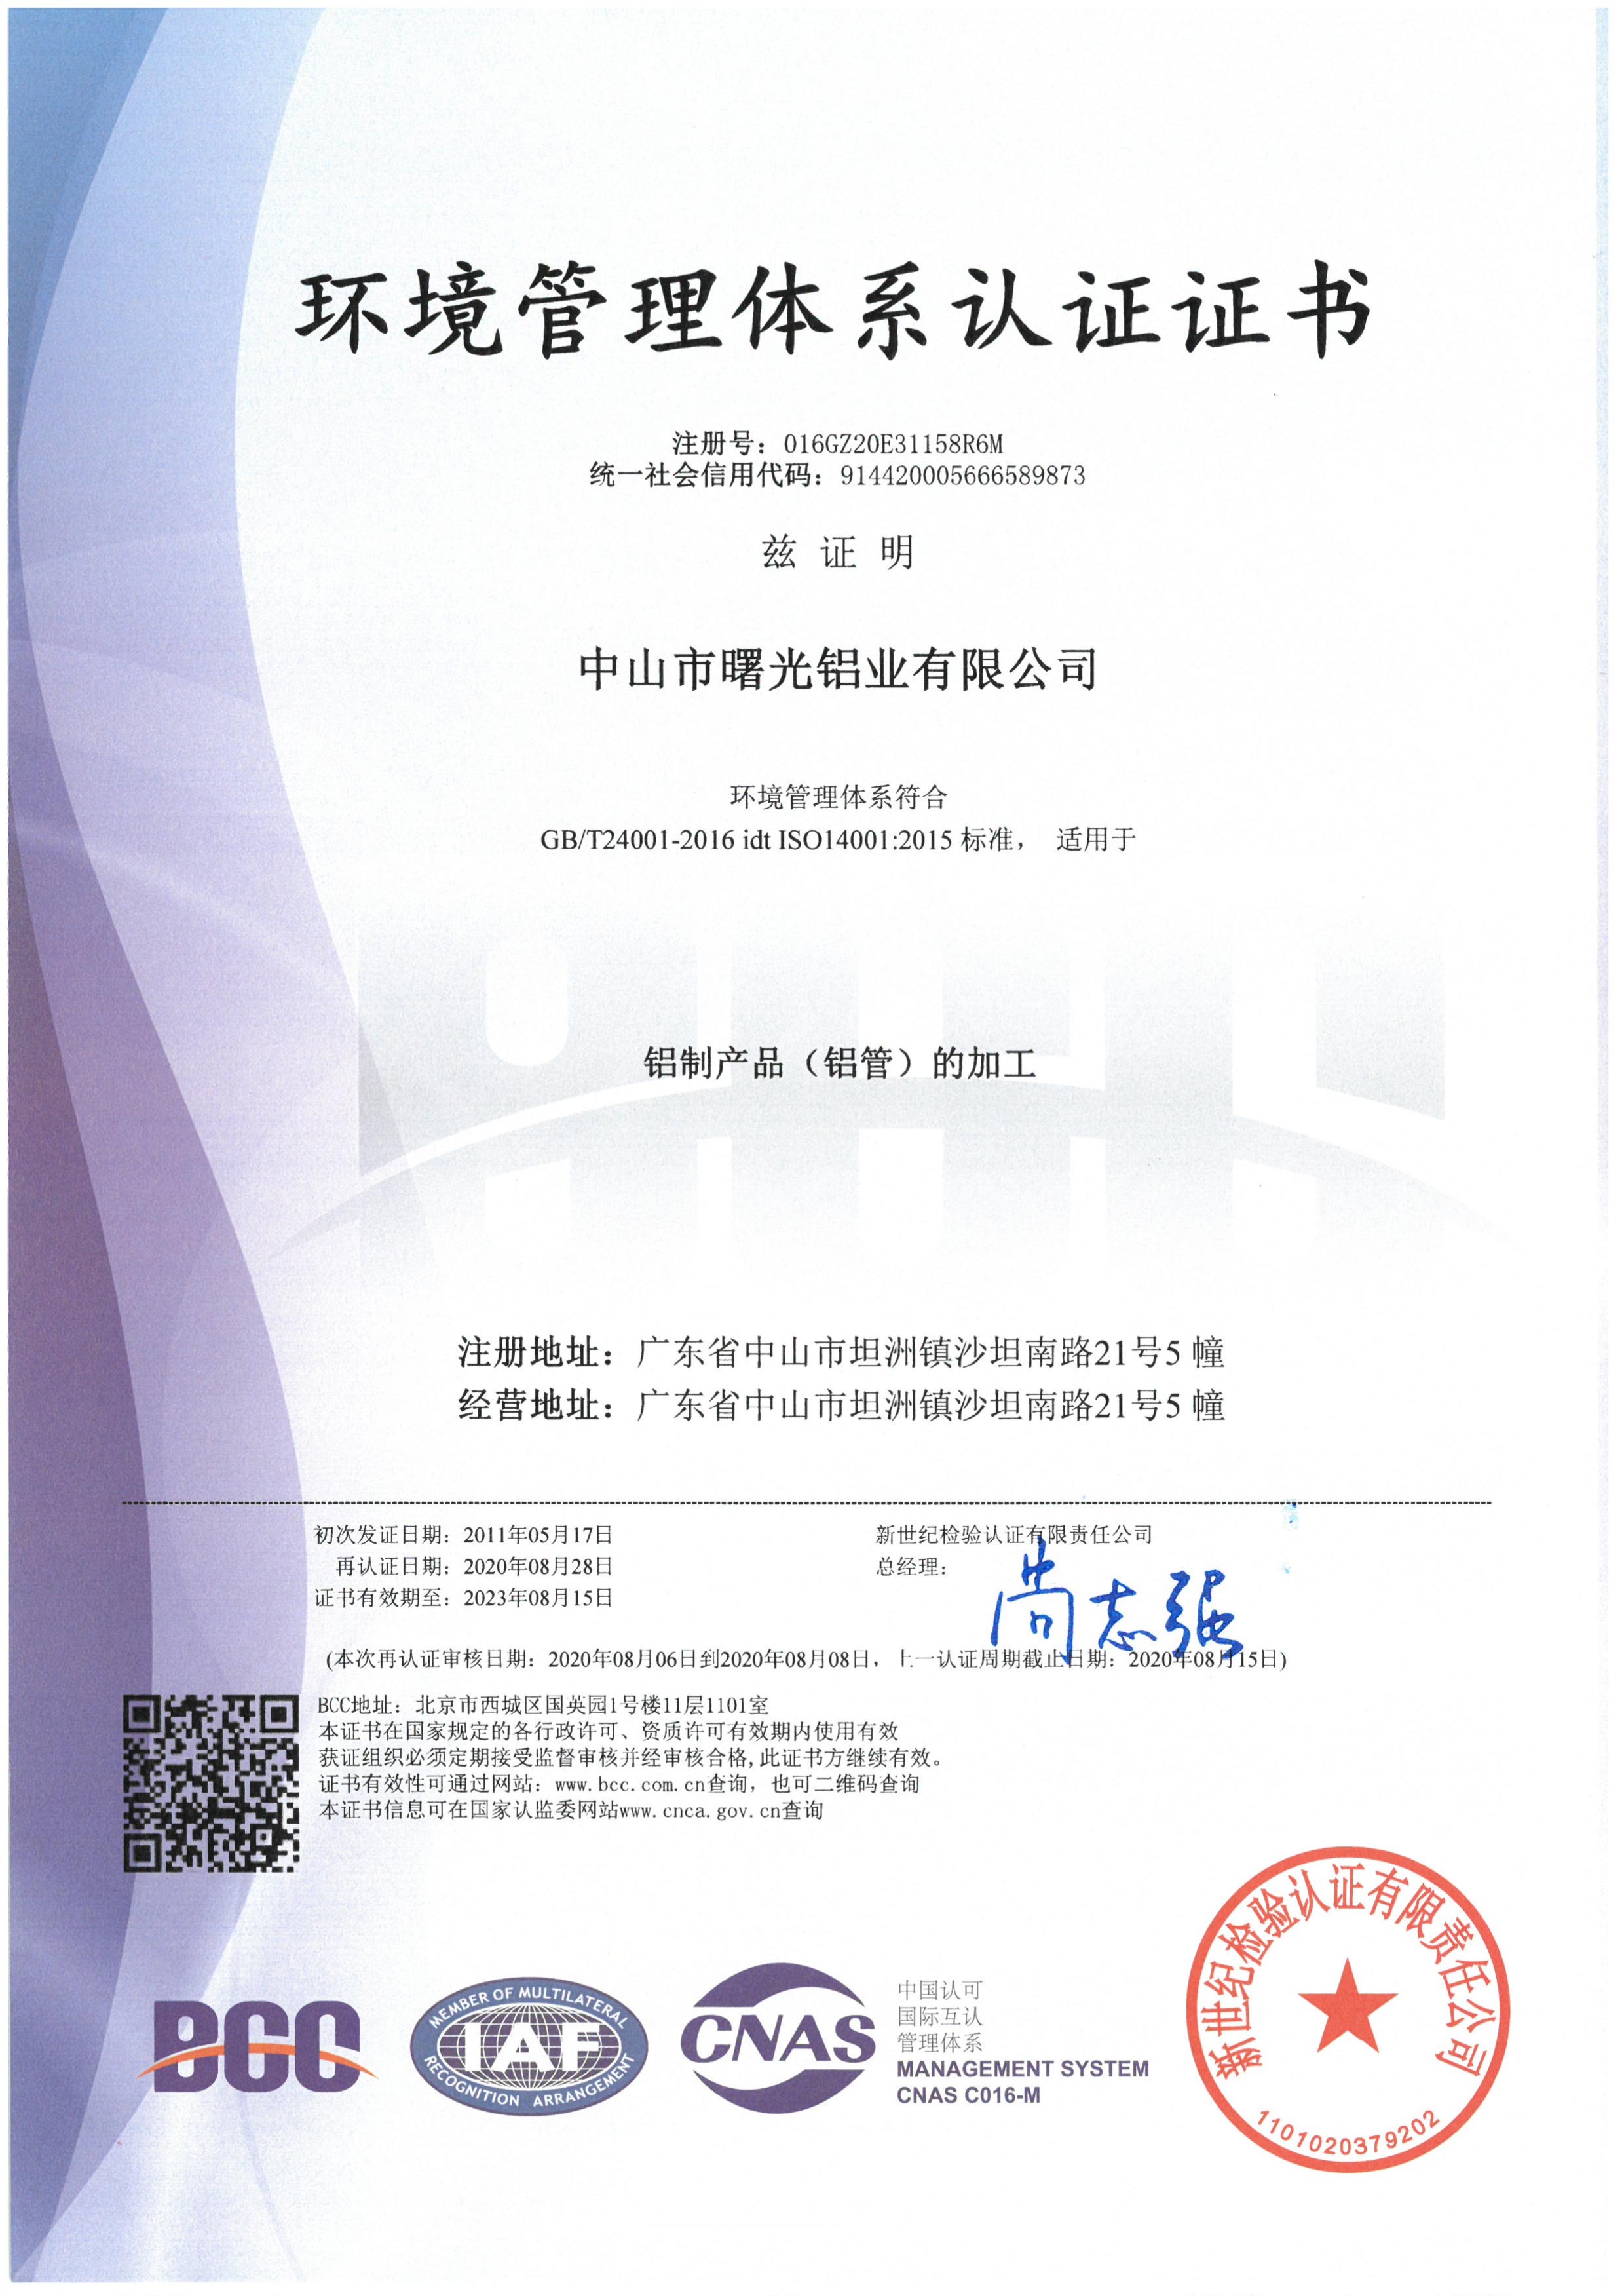 2020年ISO证书-3